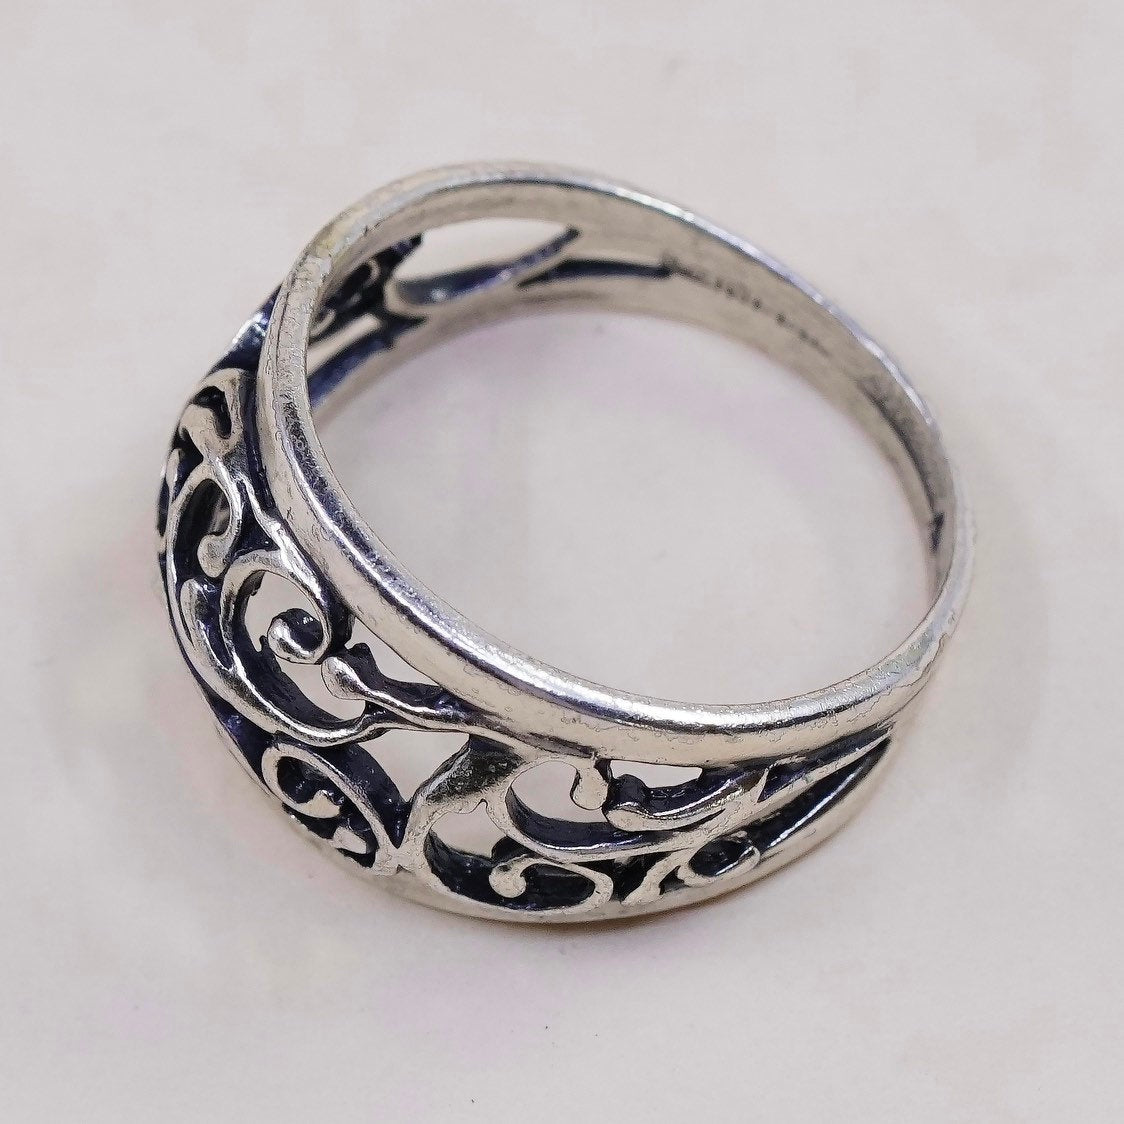 sz 7.5, vintage Sterling silver handmade ring, 925 band w/ swirl pattern